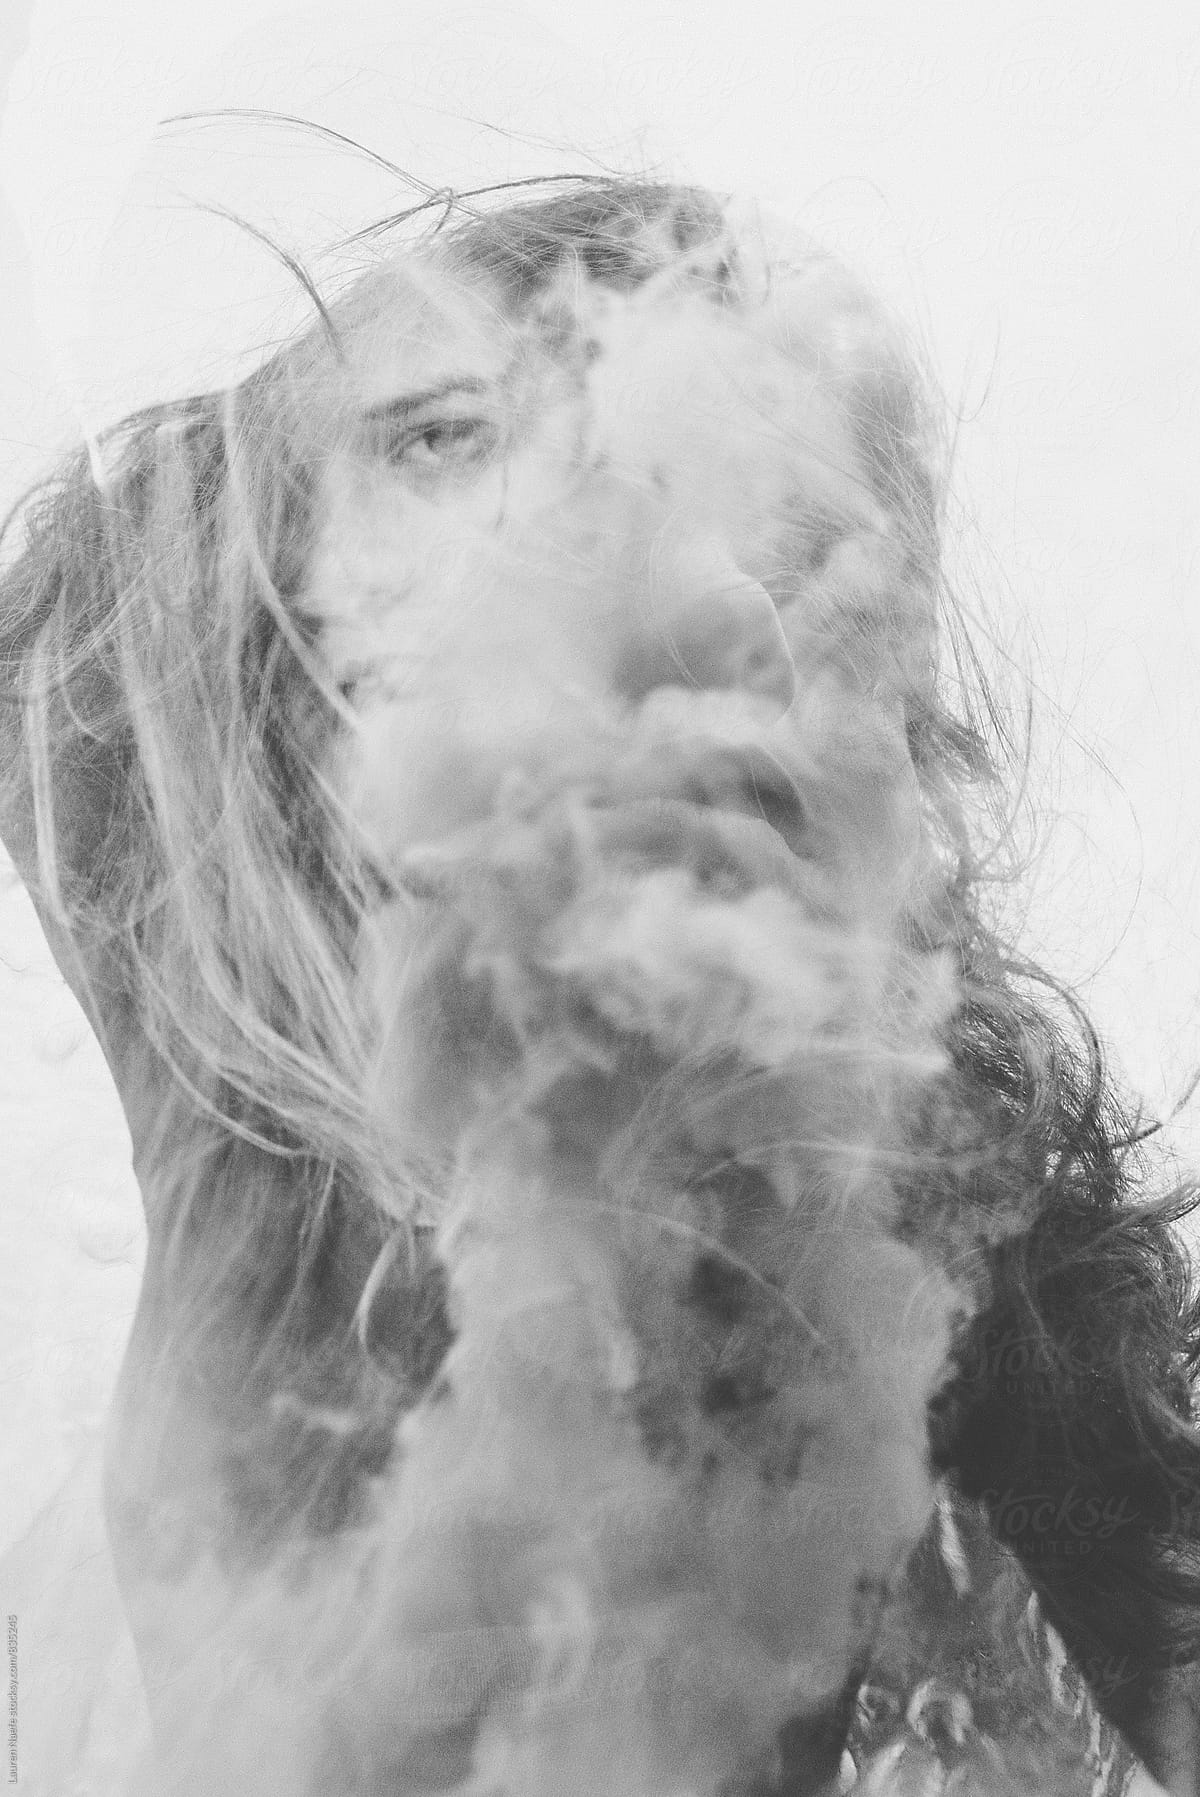 Double exposure of woman and smoke